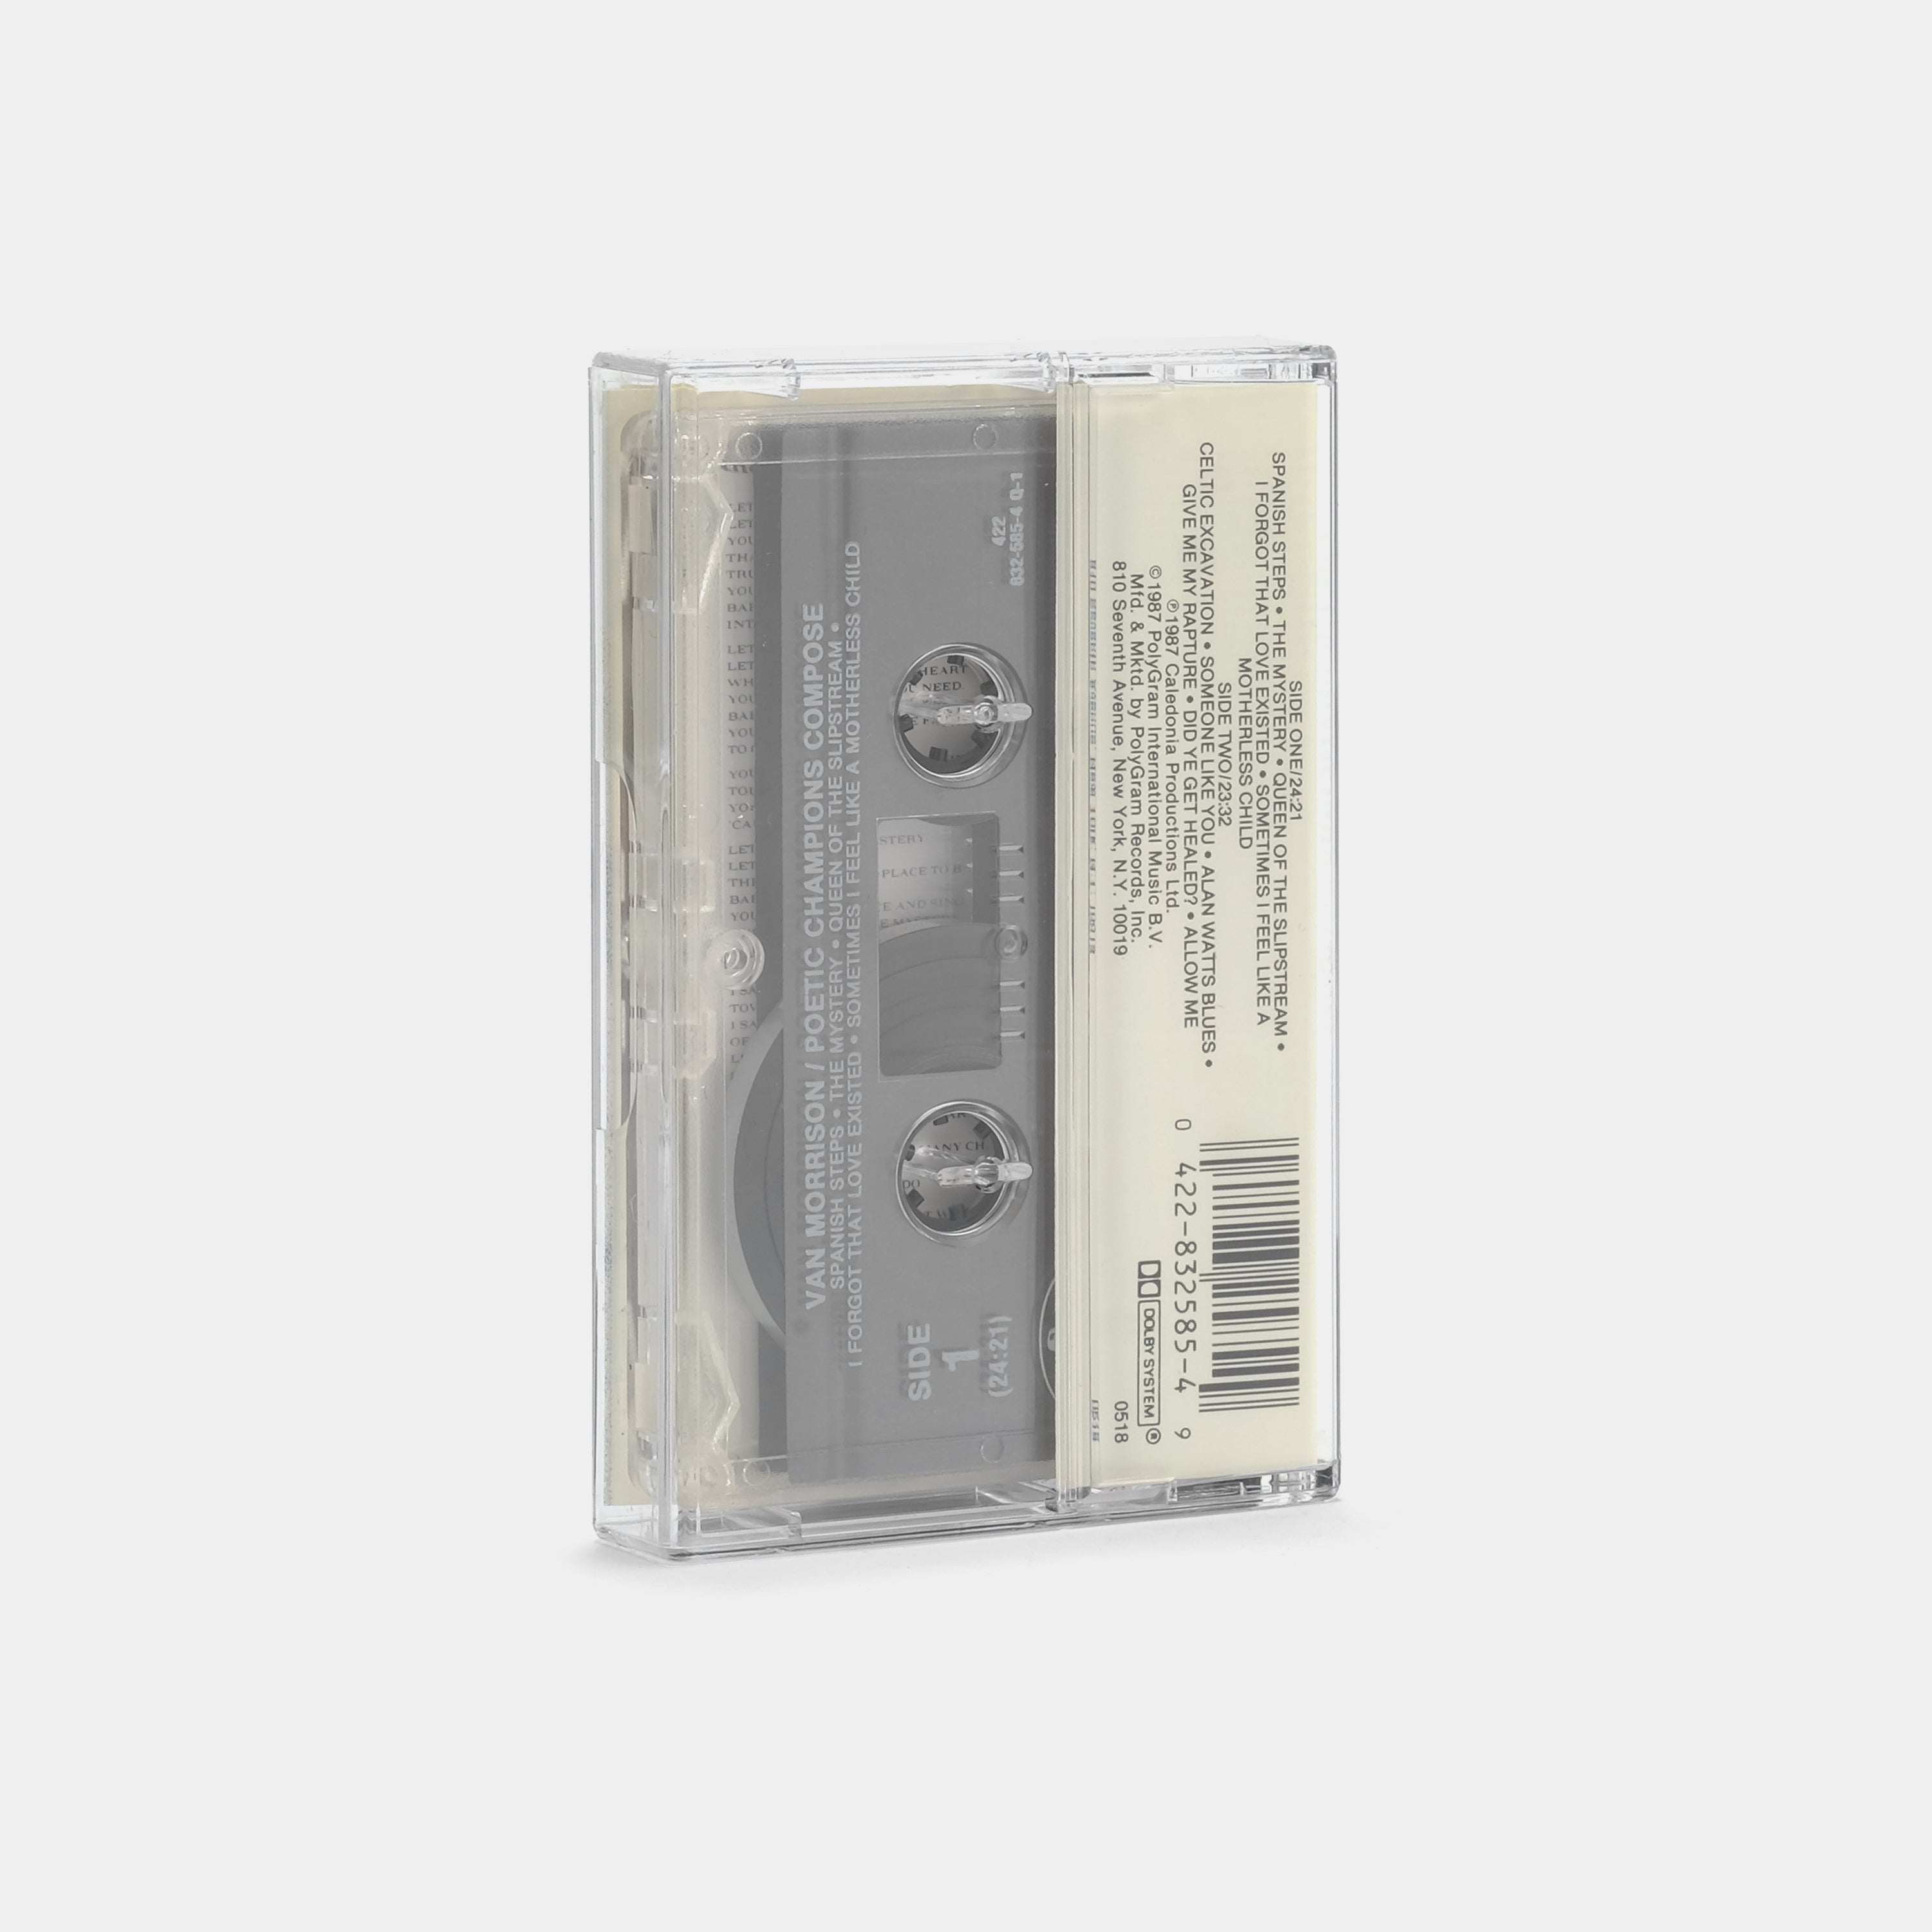 Van Morrison - Poetic Champions Compose Cassette Tape